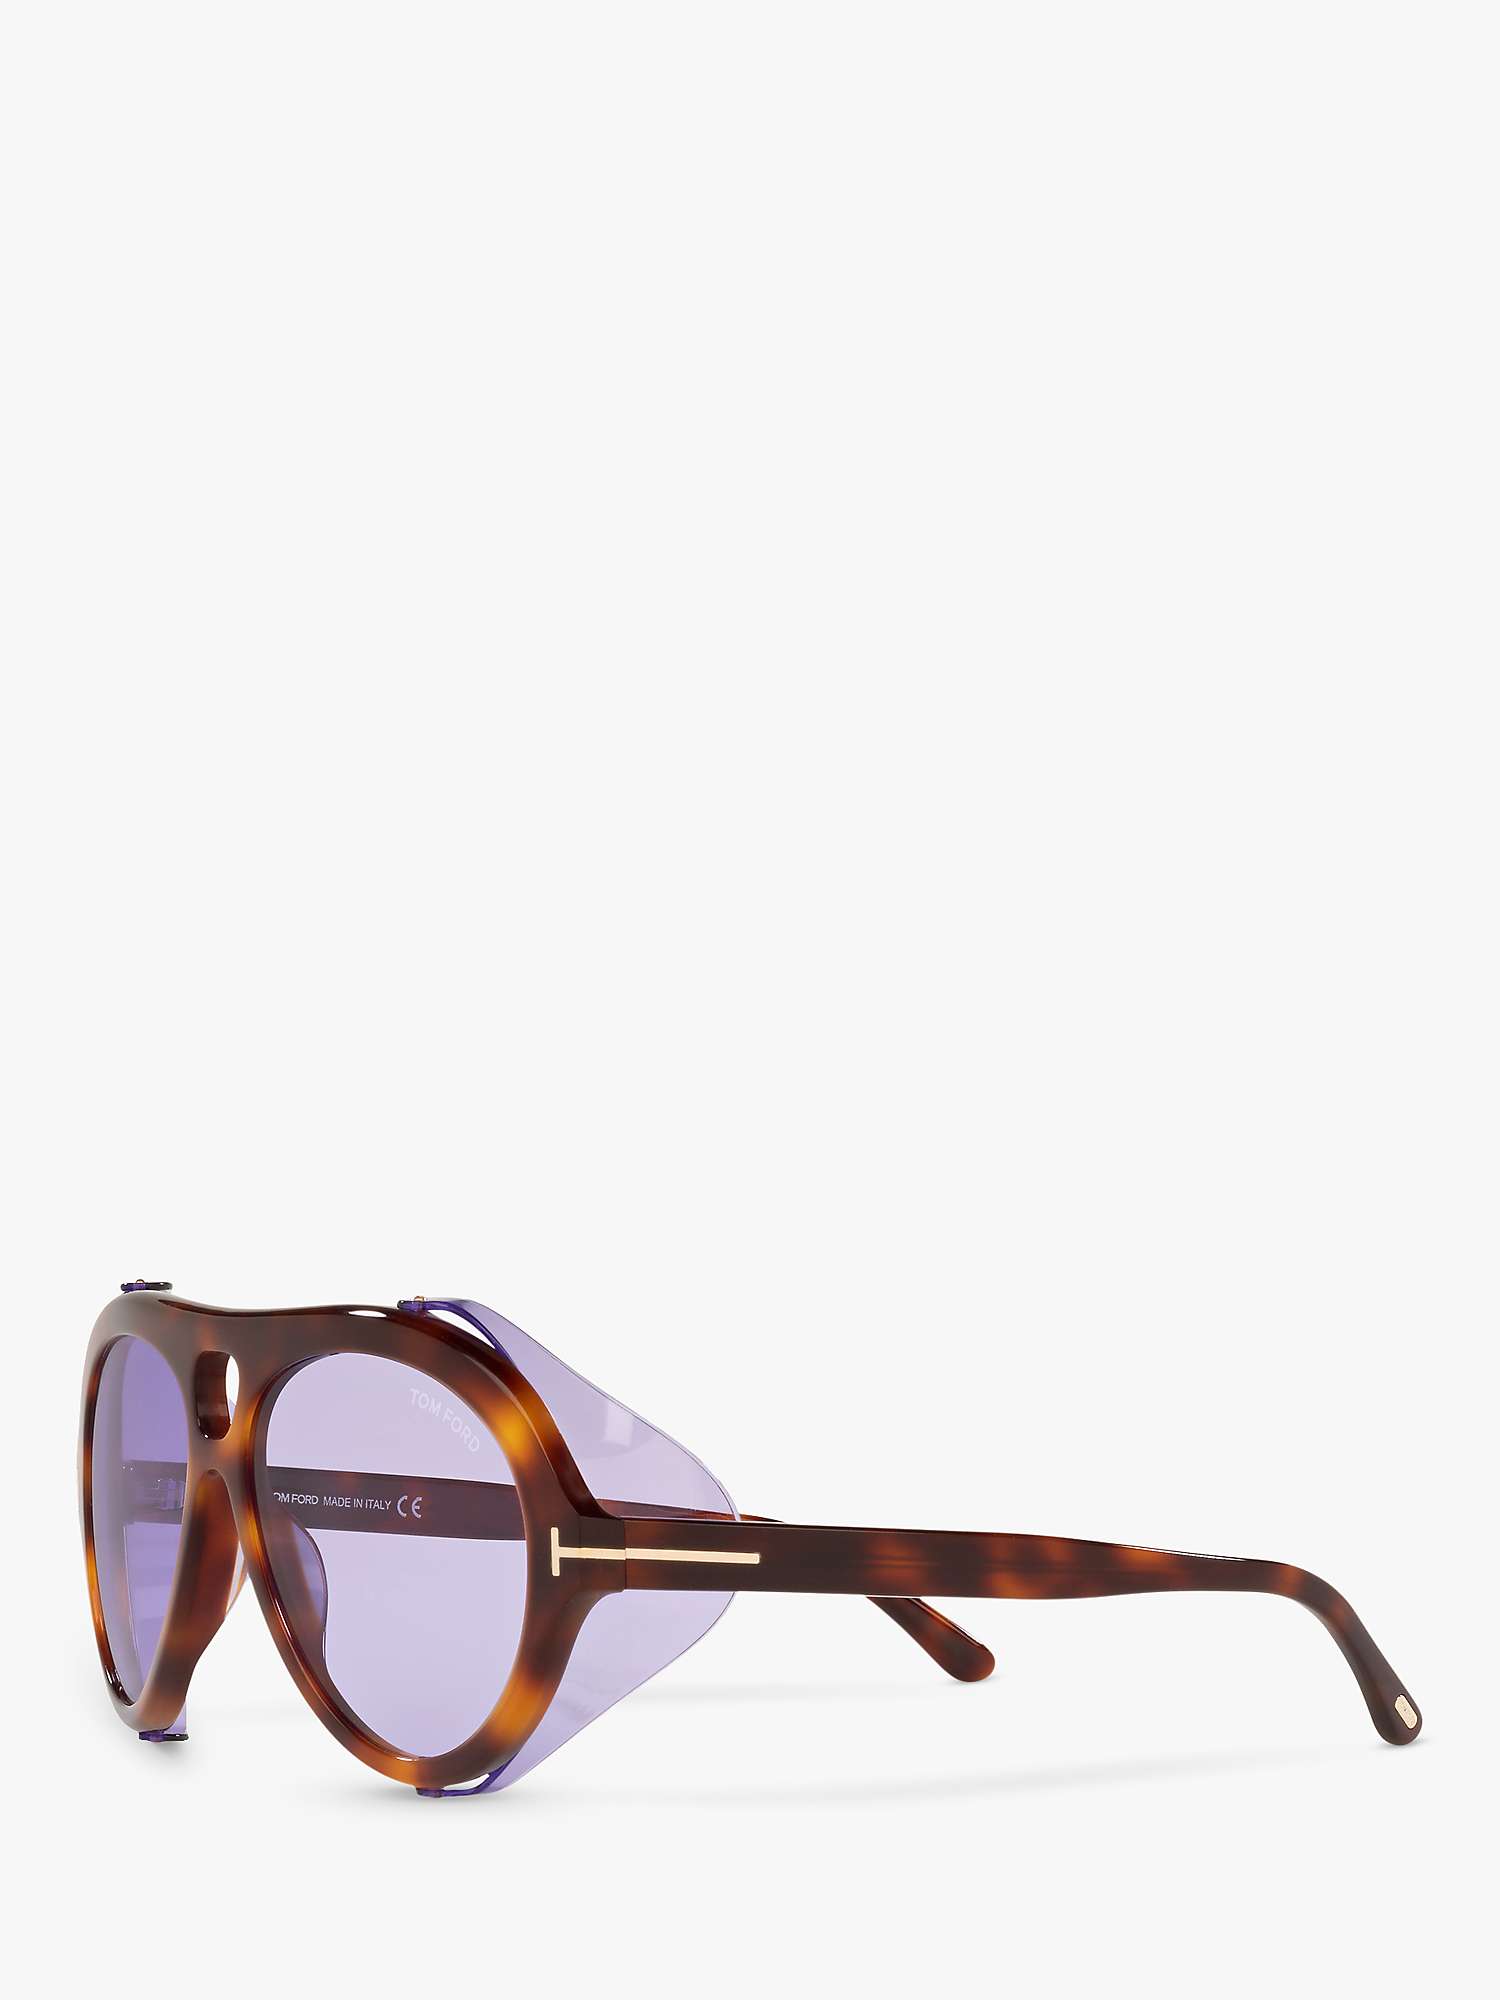 Buy TOM FORD FT0882 Men's Neughman Oval Sunglasses, Tortoise/Lilac Online at johnlewis.com